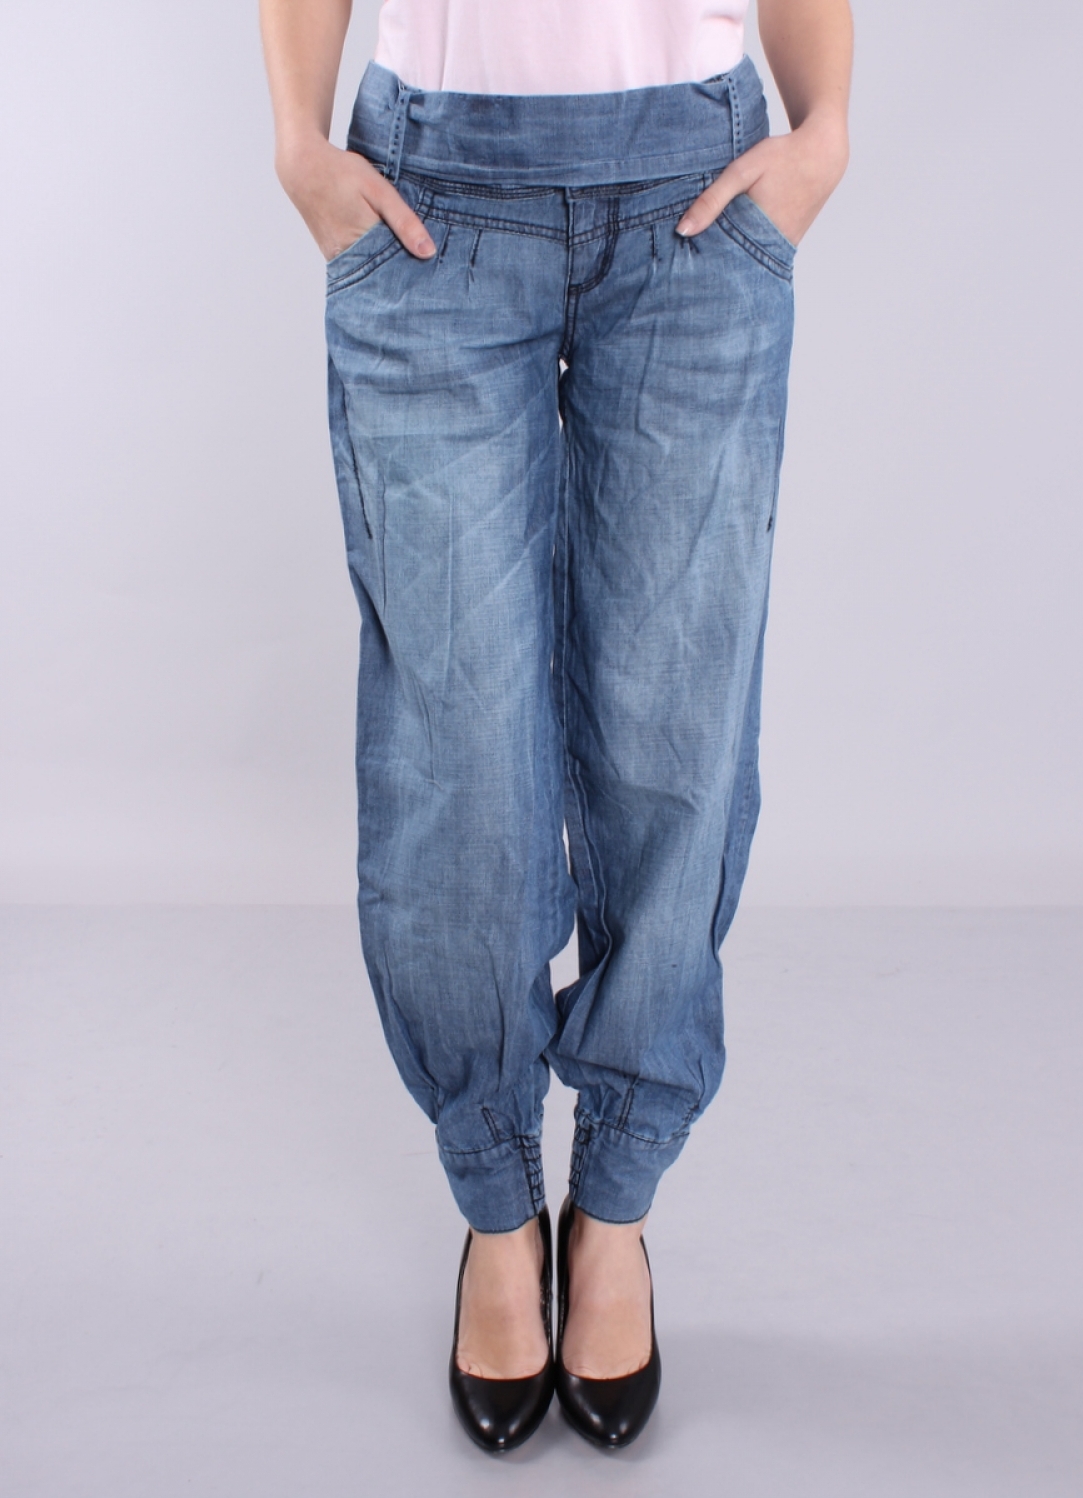 Широкие джинсы на резинке женские. Штаны бананы 90-х. Джинсы бананы. Широкие джинсы с резинкой внизу женские.